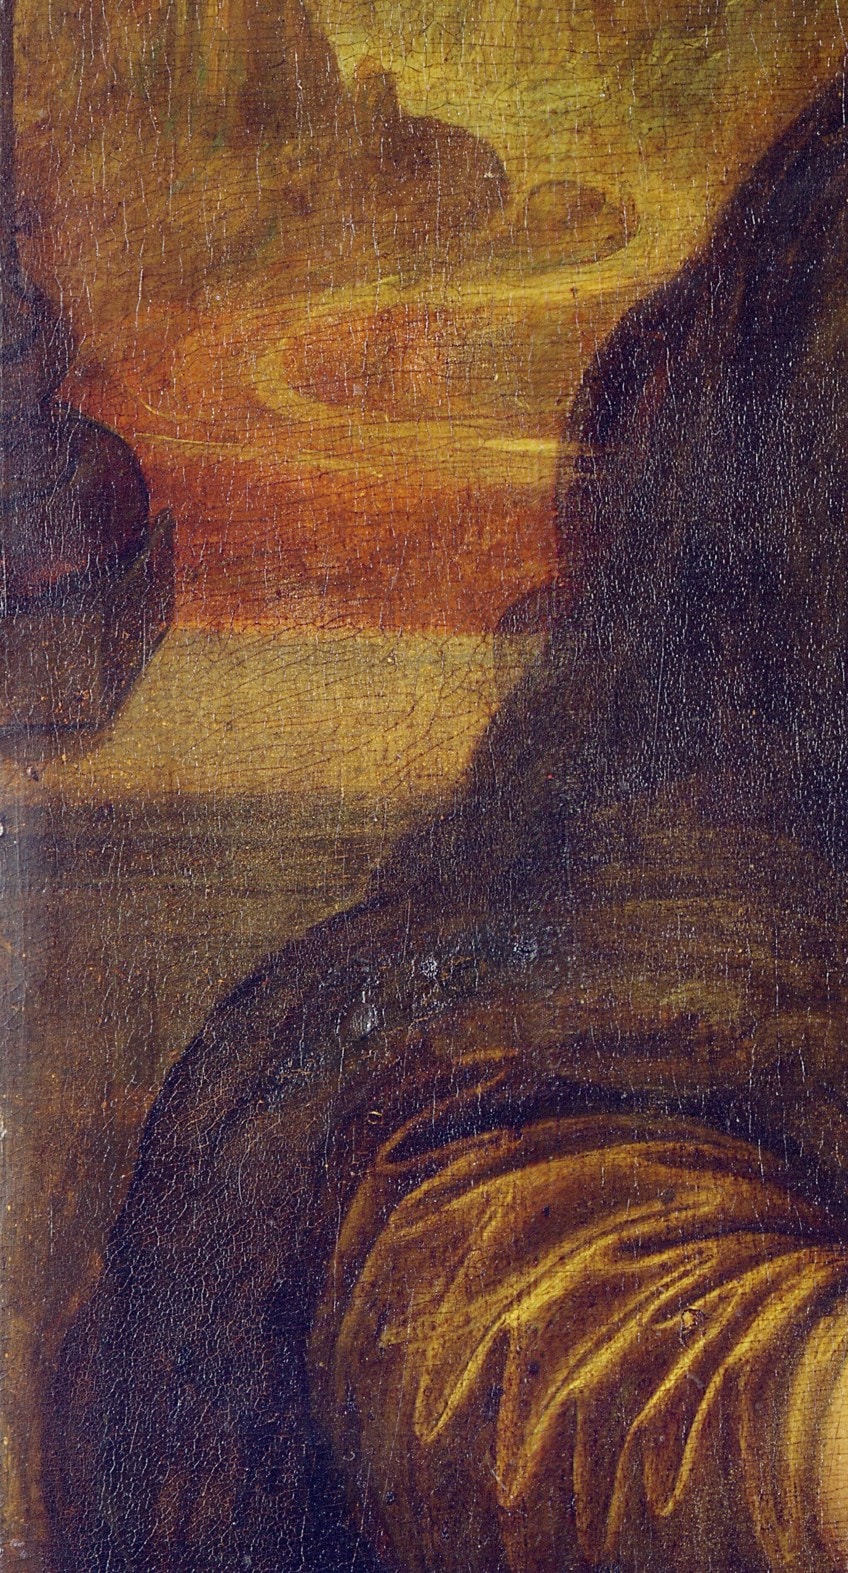 Mona Lisa Painting Detail